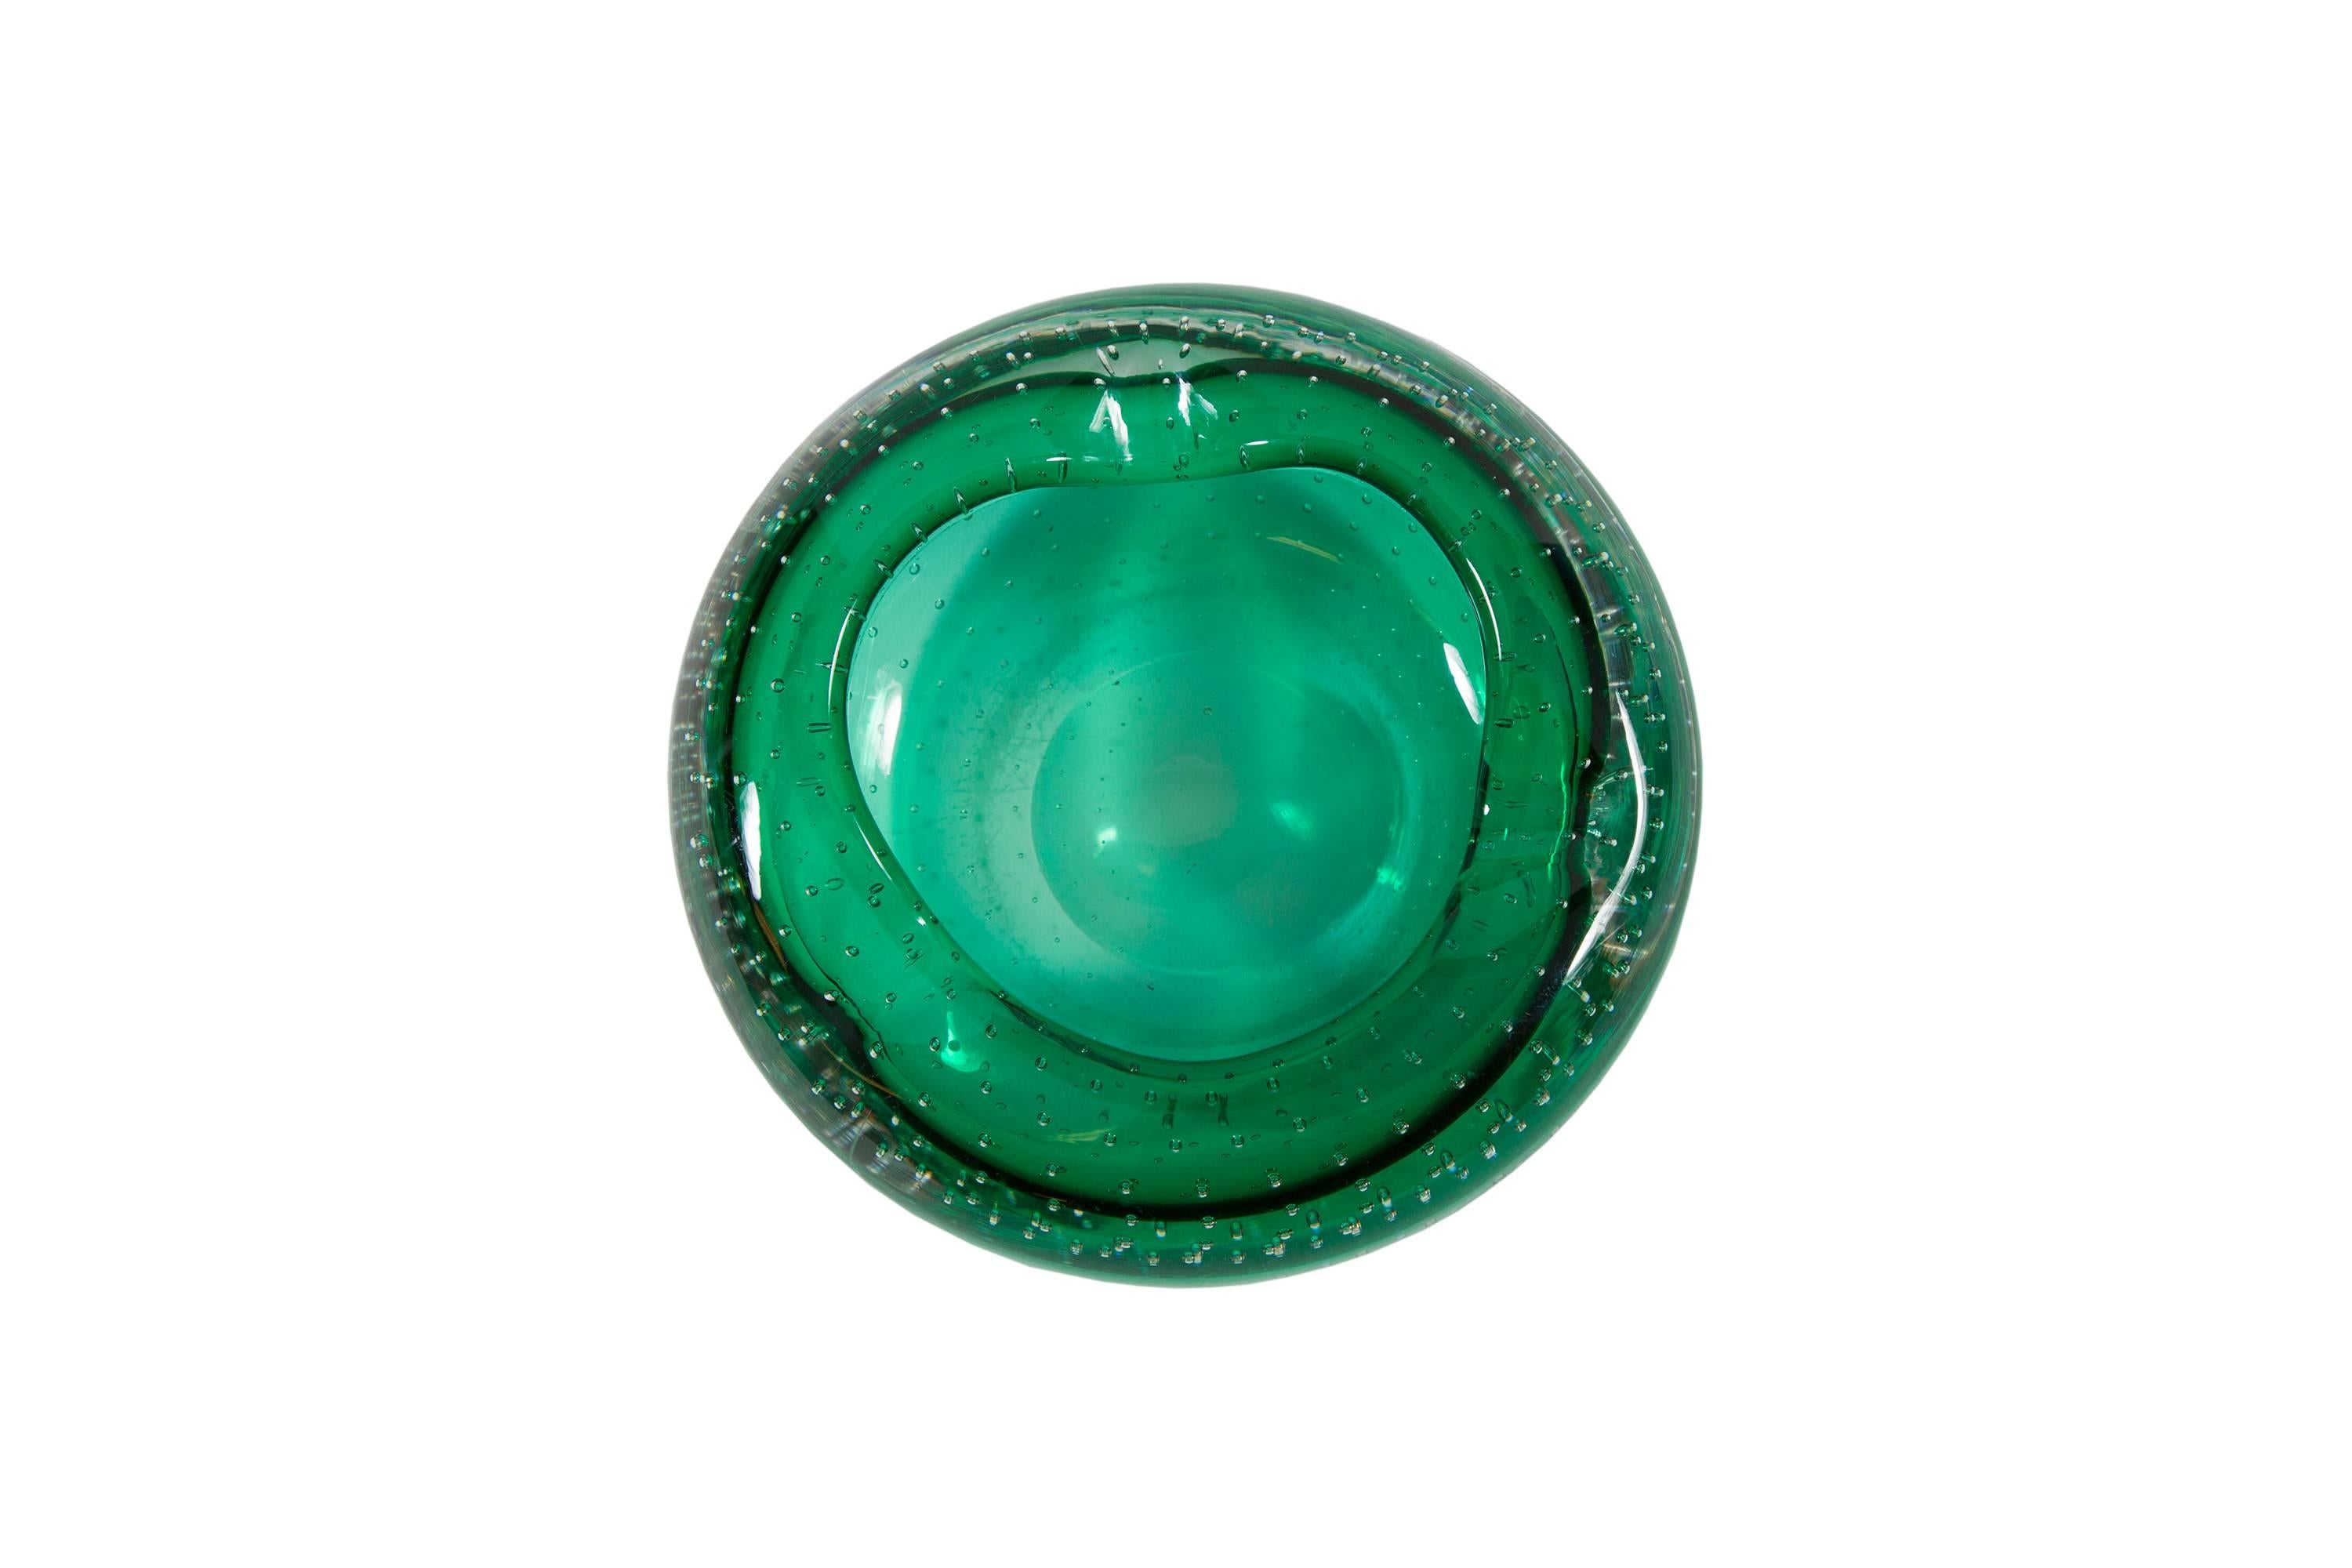 Green Murano glass decorative bowl dish.